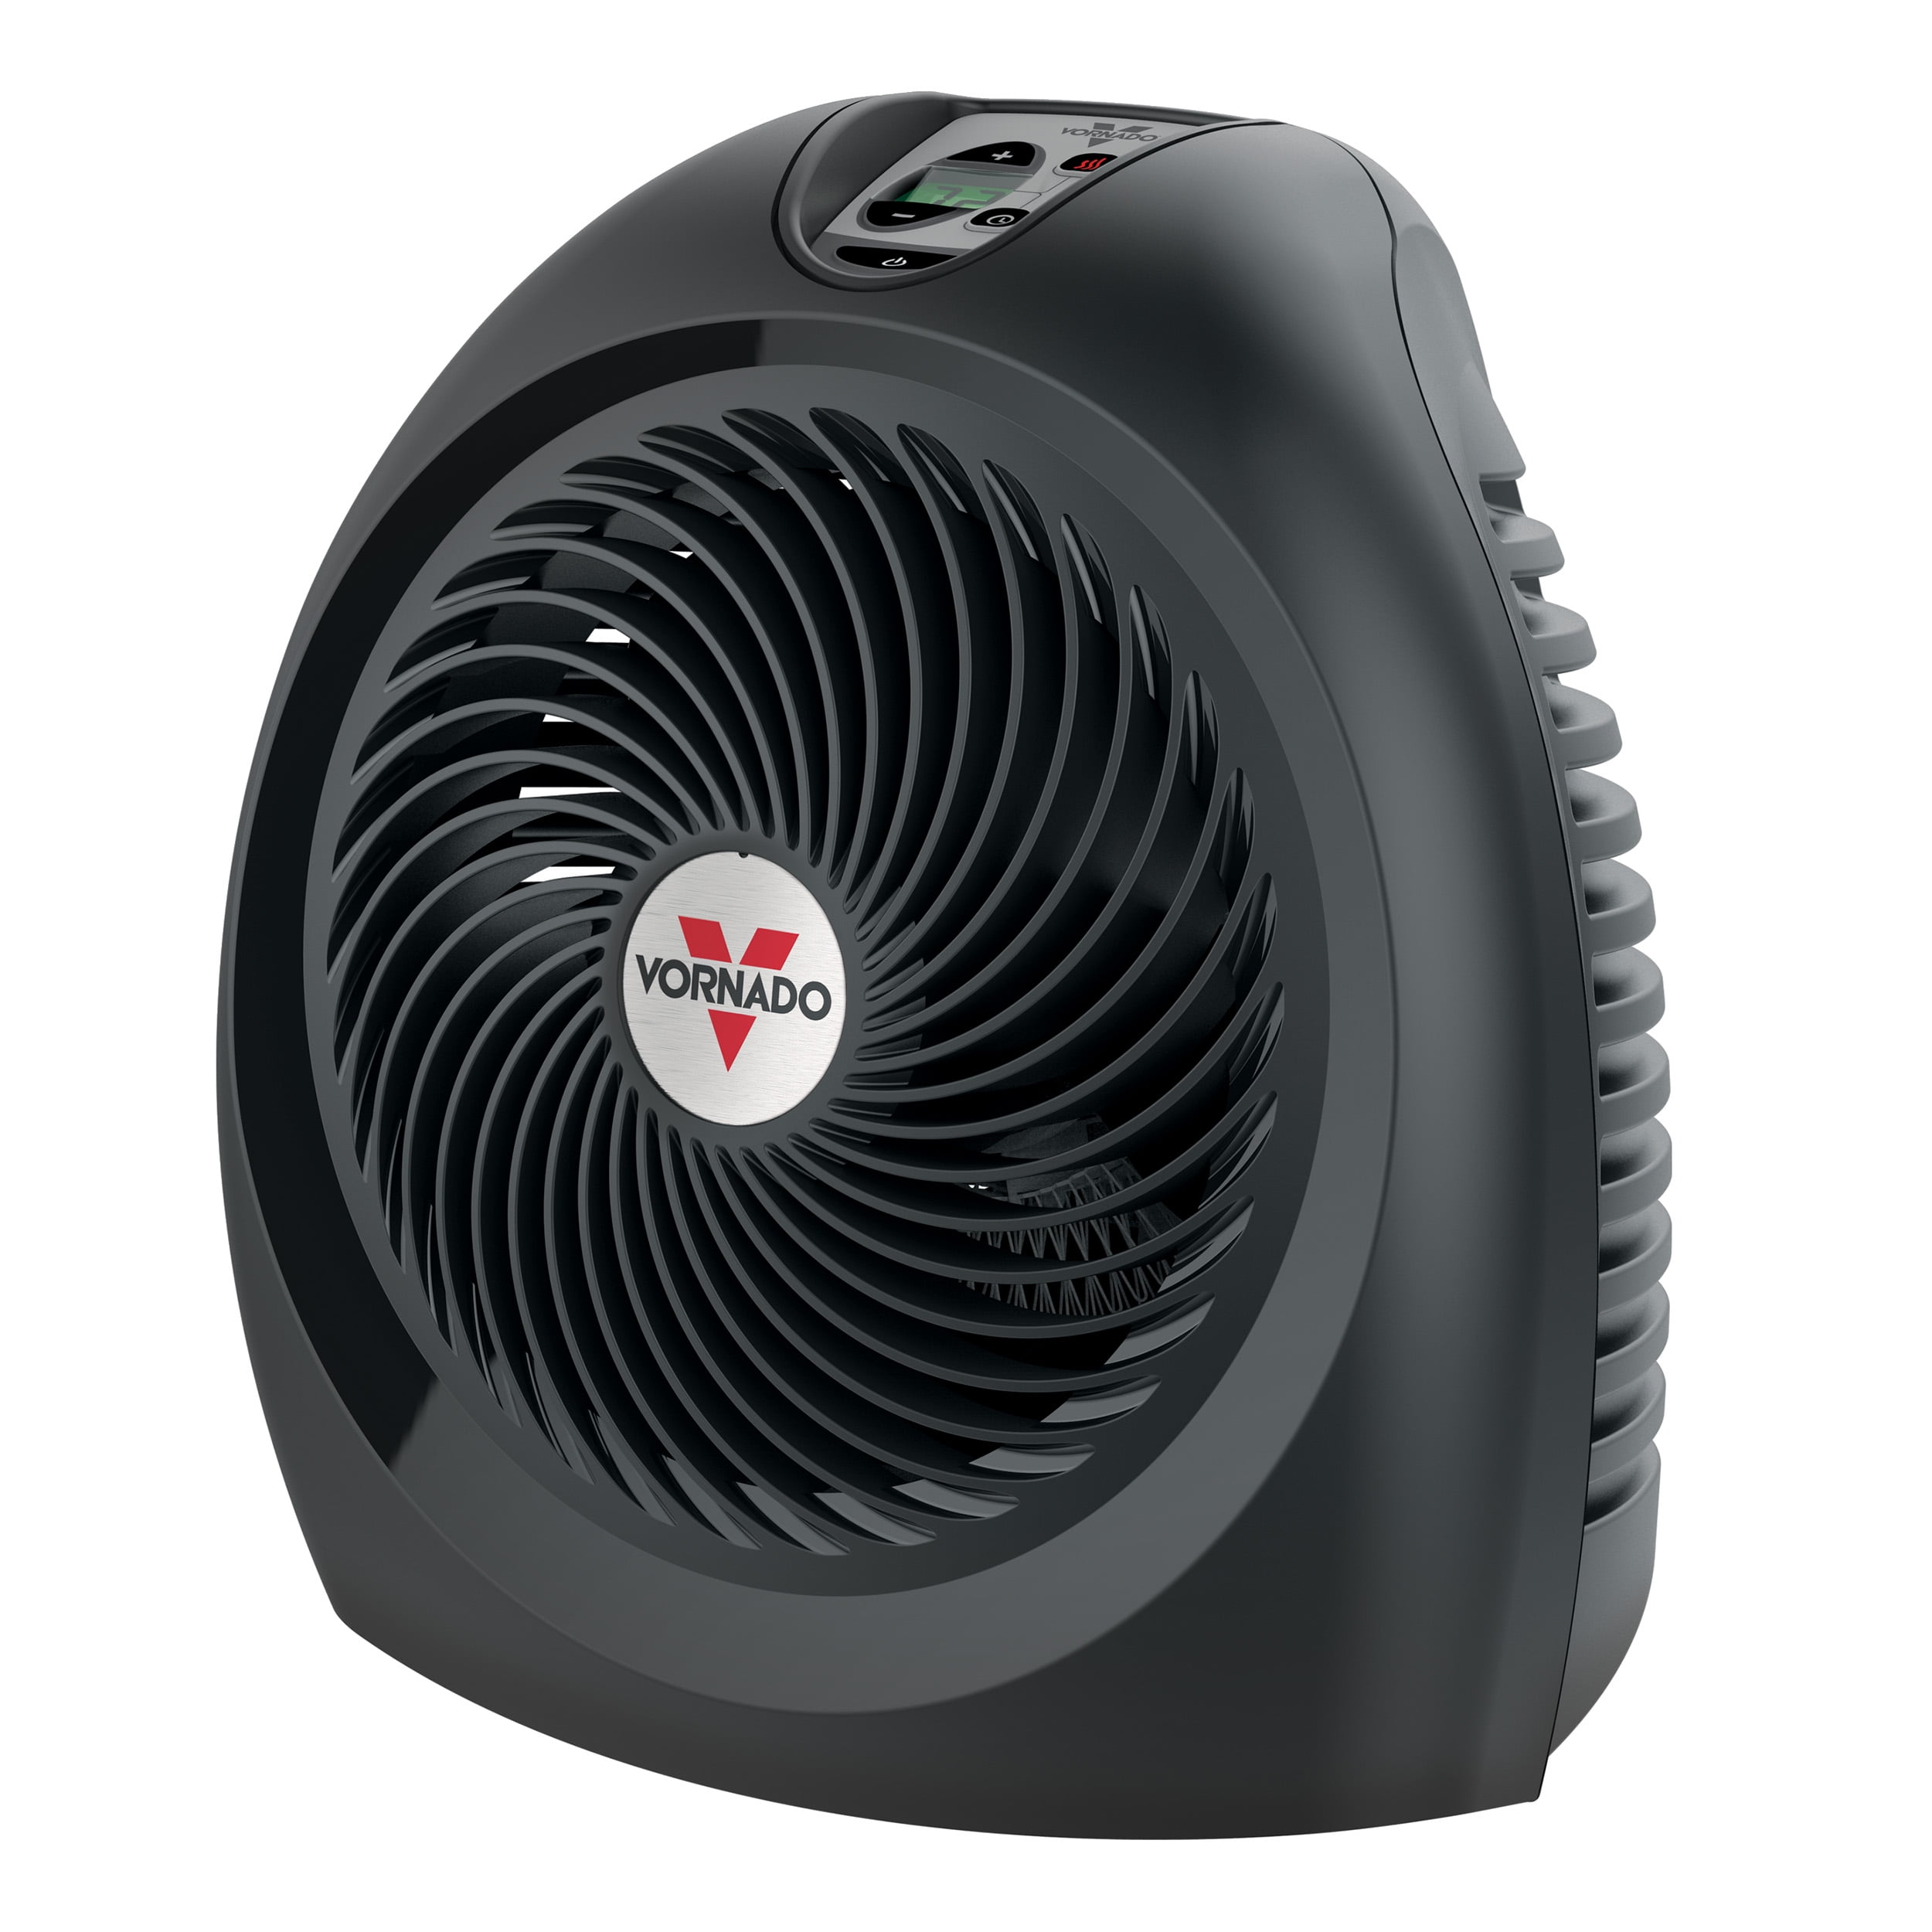 Vornado soufflant Badlüfter rapidement radiateur chauffage radiateur vh200 avec thermostat